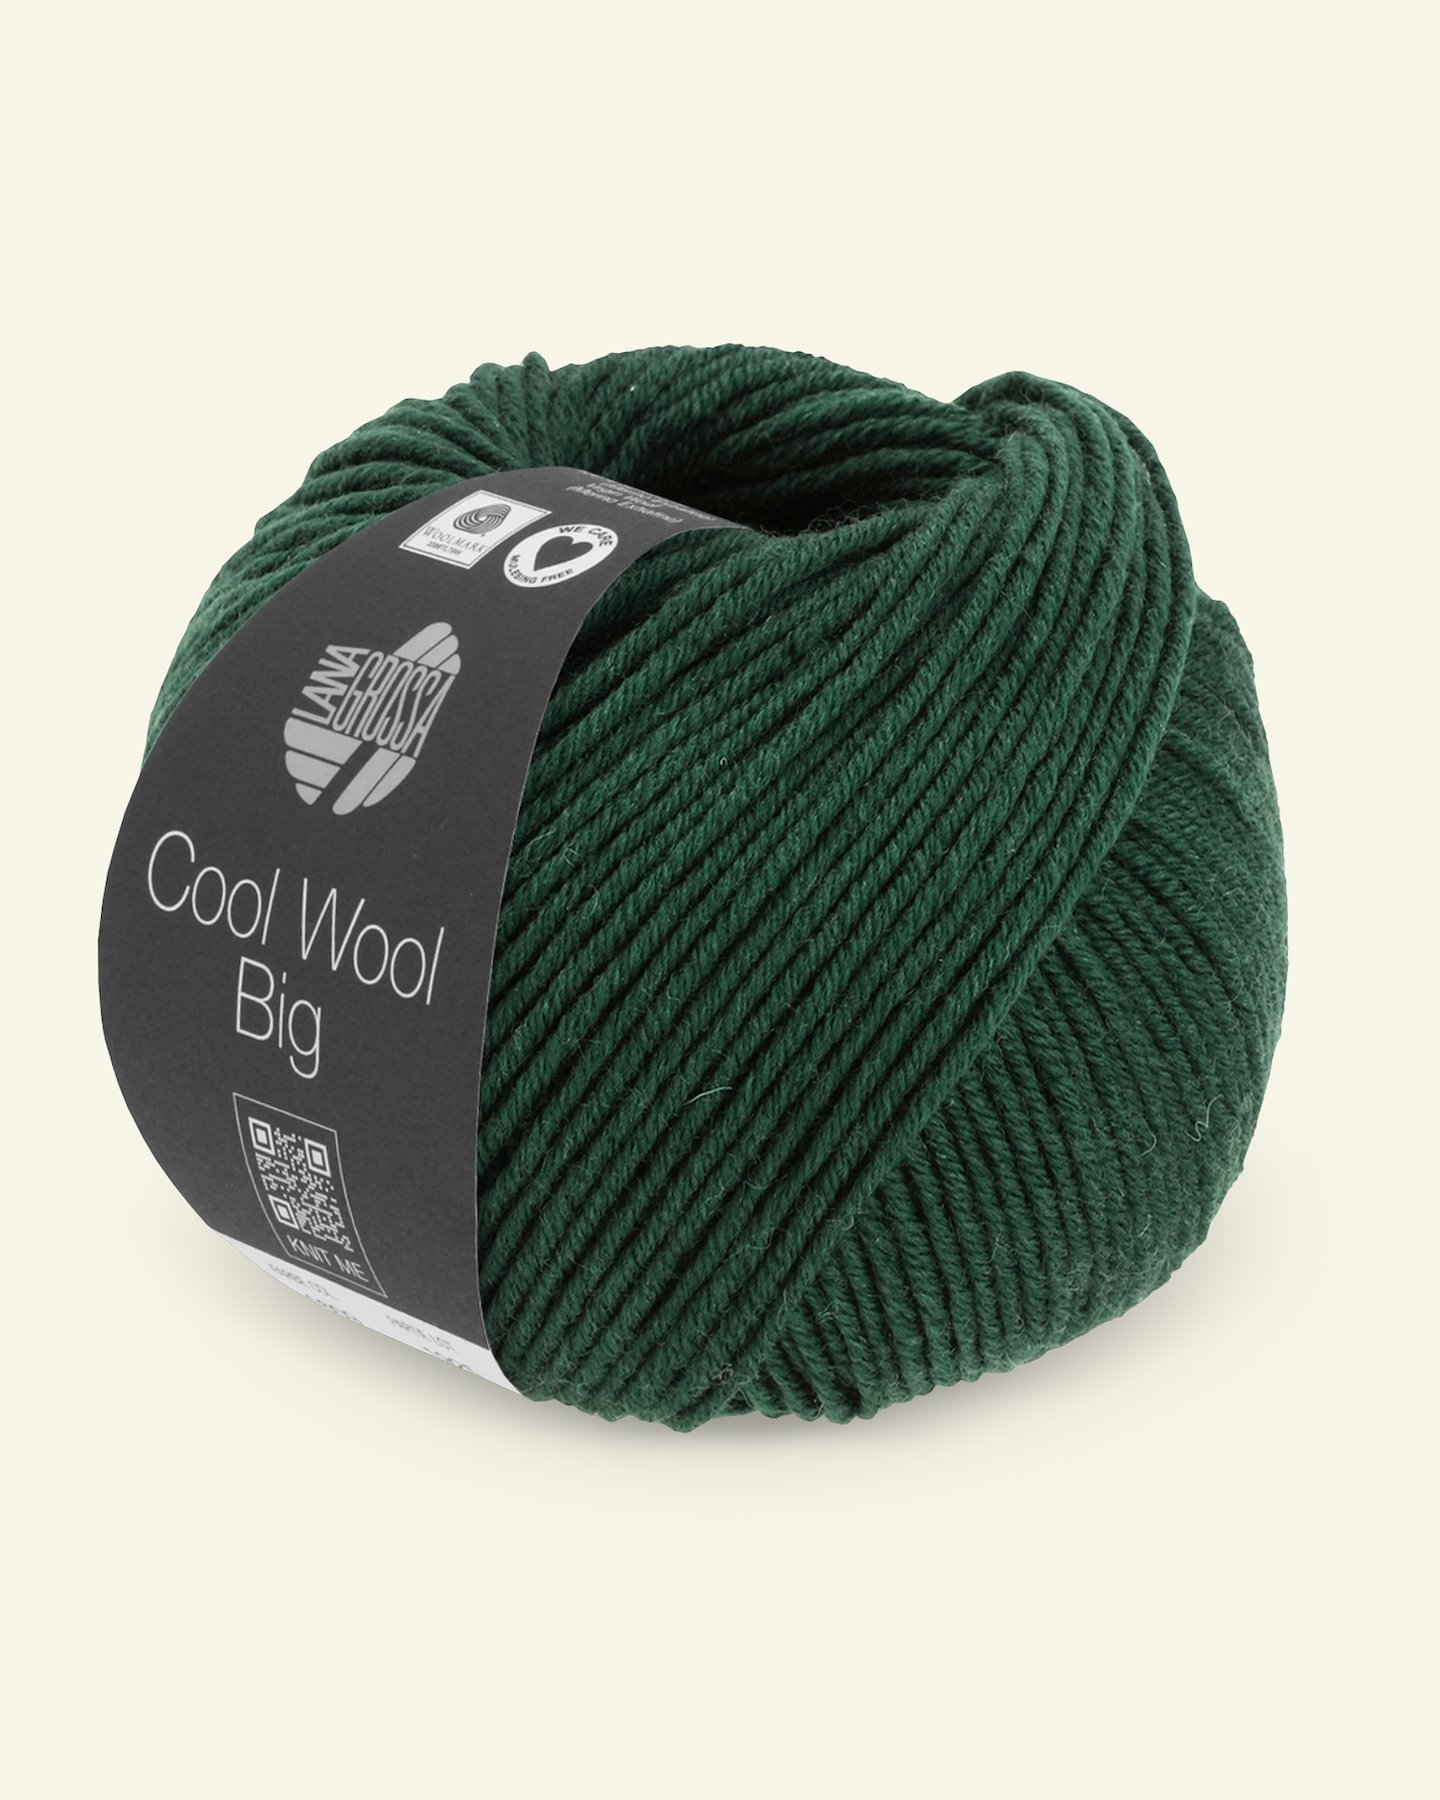 Lana Grossa, extrafine merino wool yarn "Cool Wool Big", petrolgreen 90001093_pack